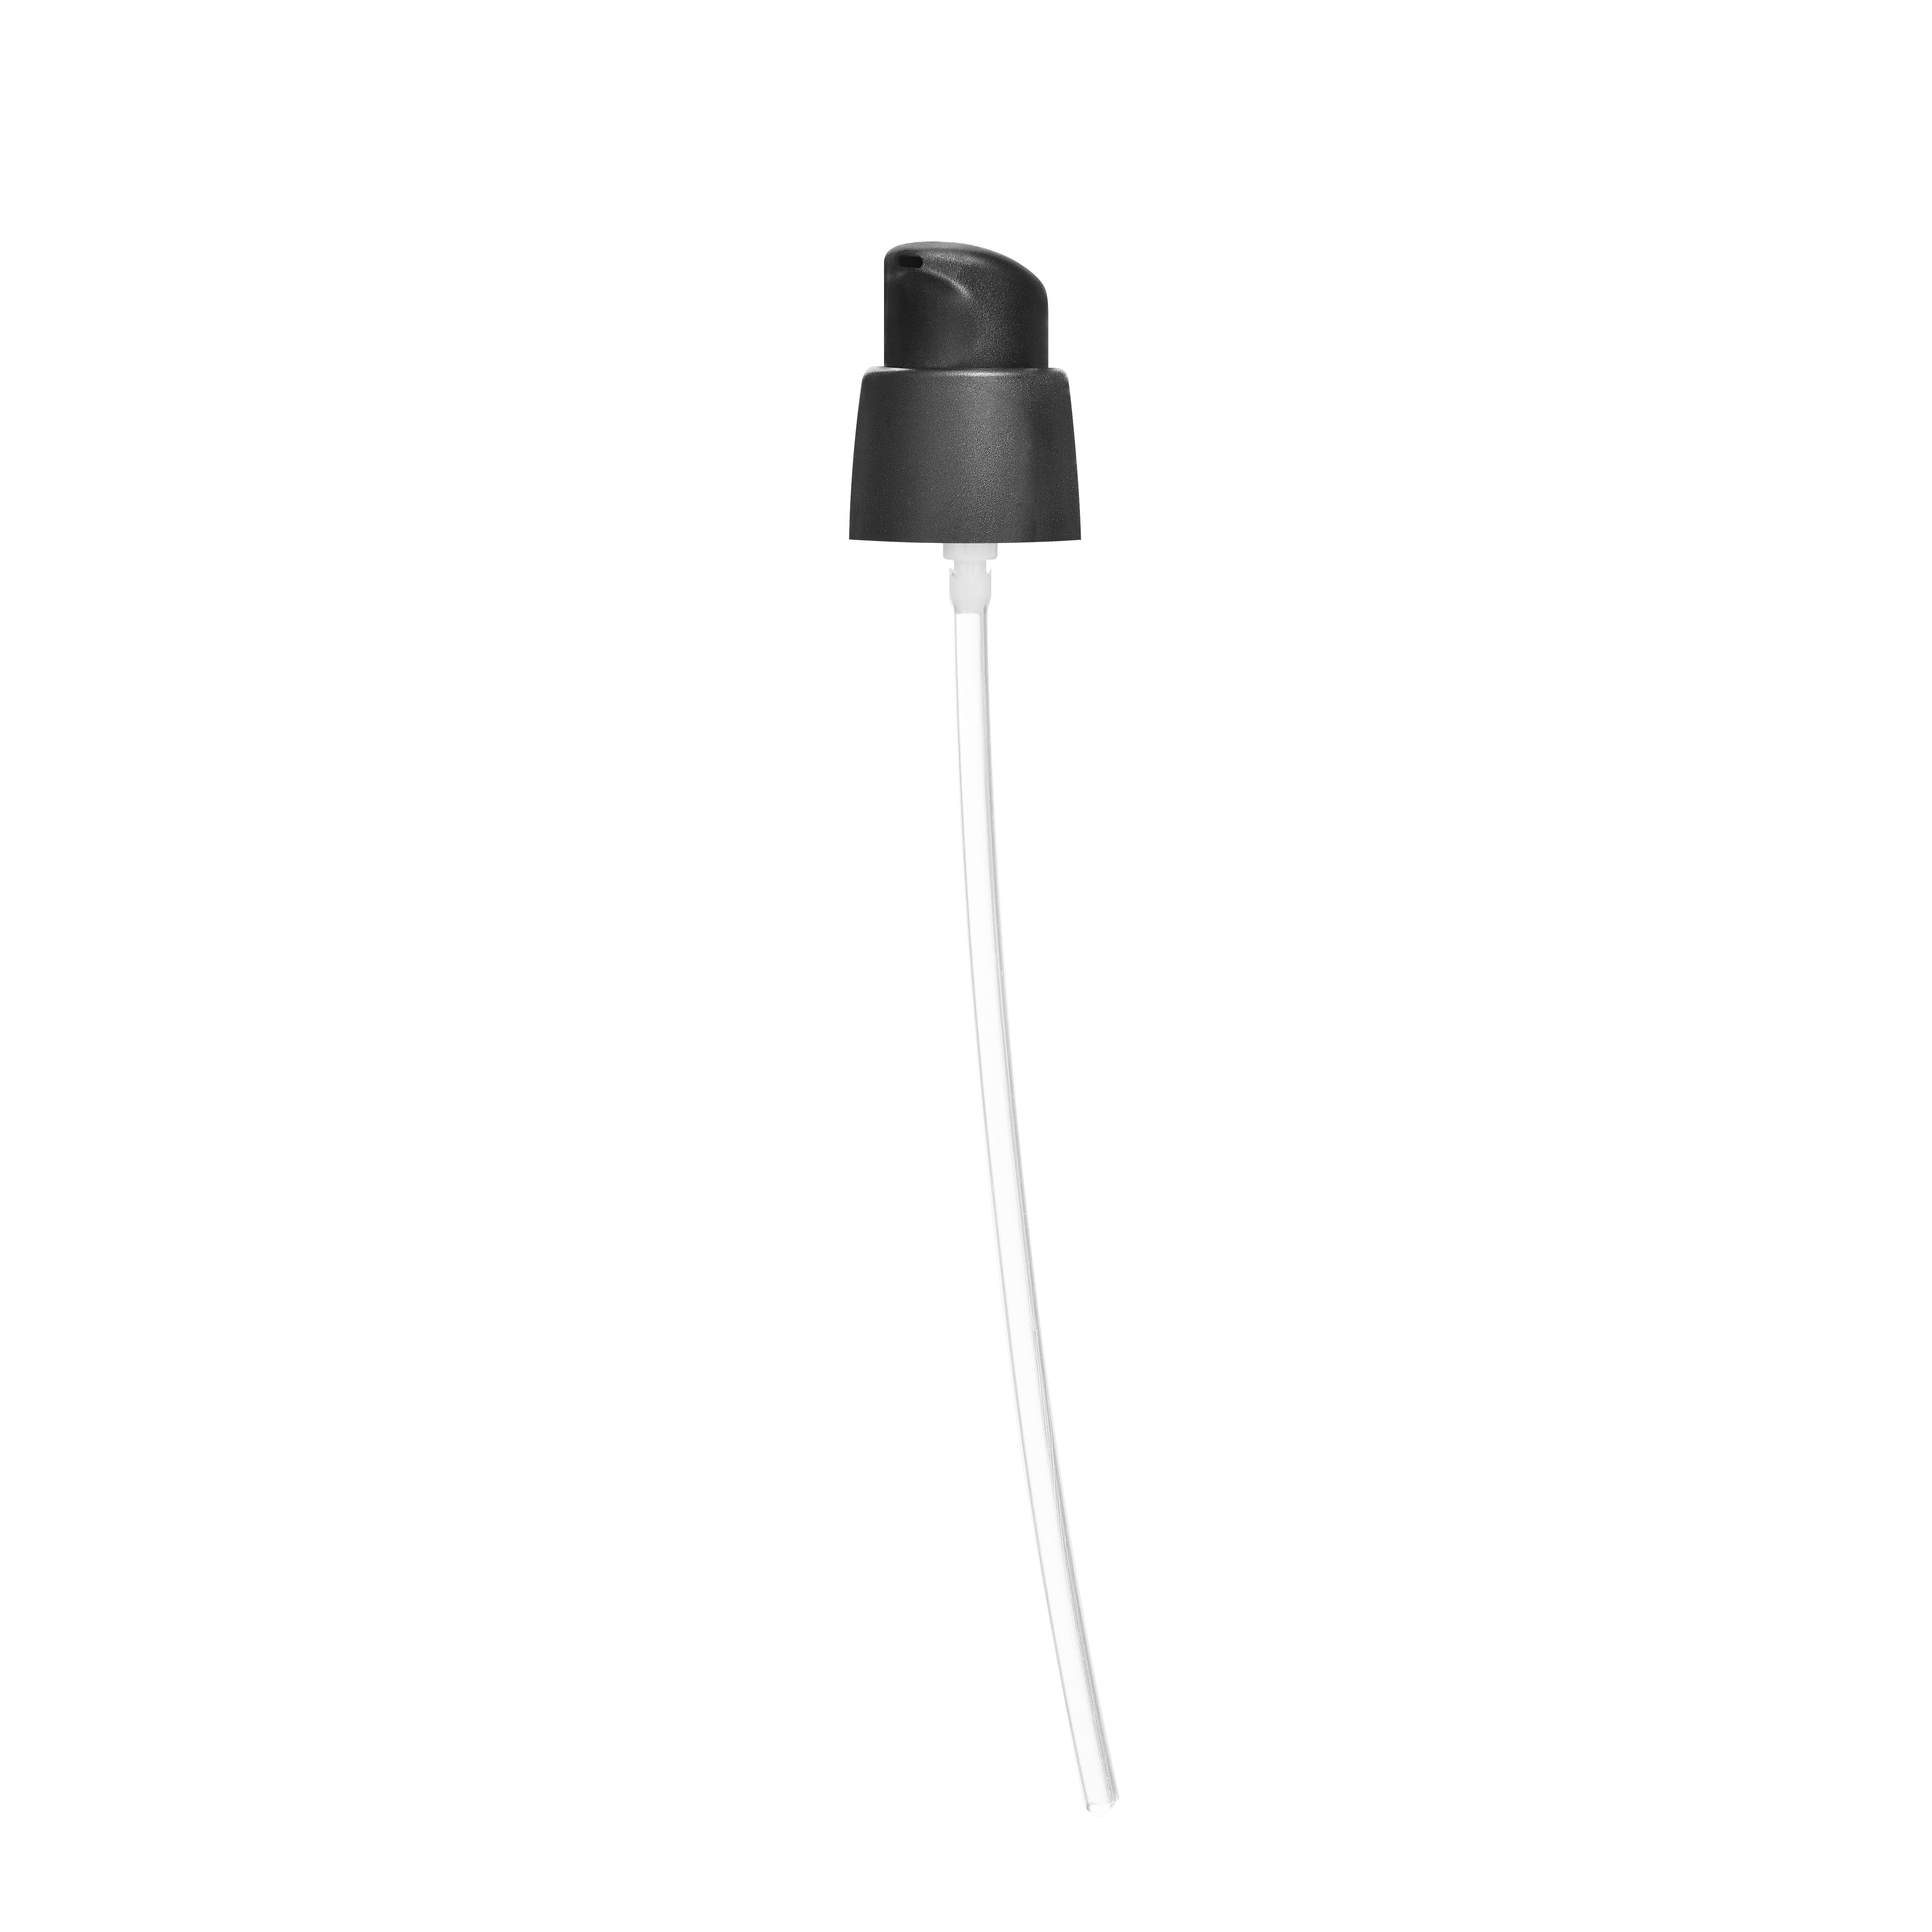 Lotion pump Evolution 18/400, PP, black, matte finish, dose 0.15ml, black security clip (Myrtle 15)